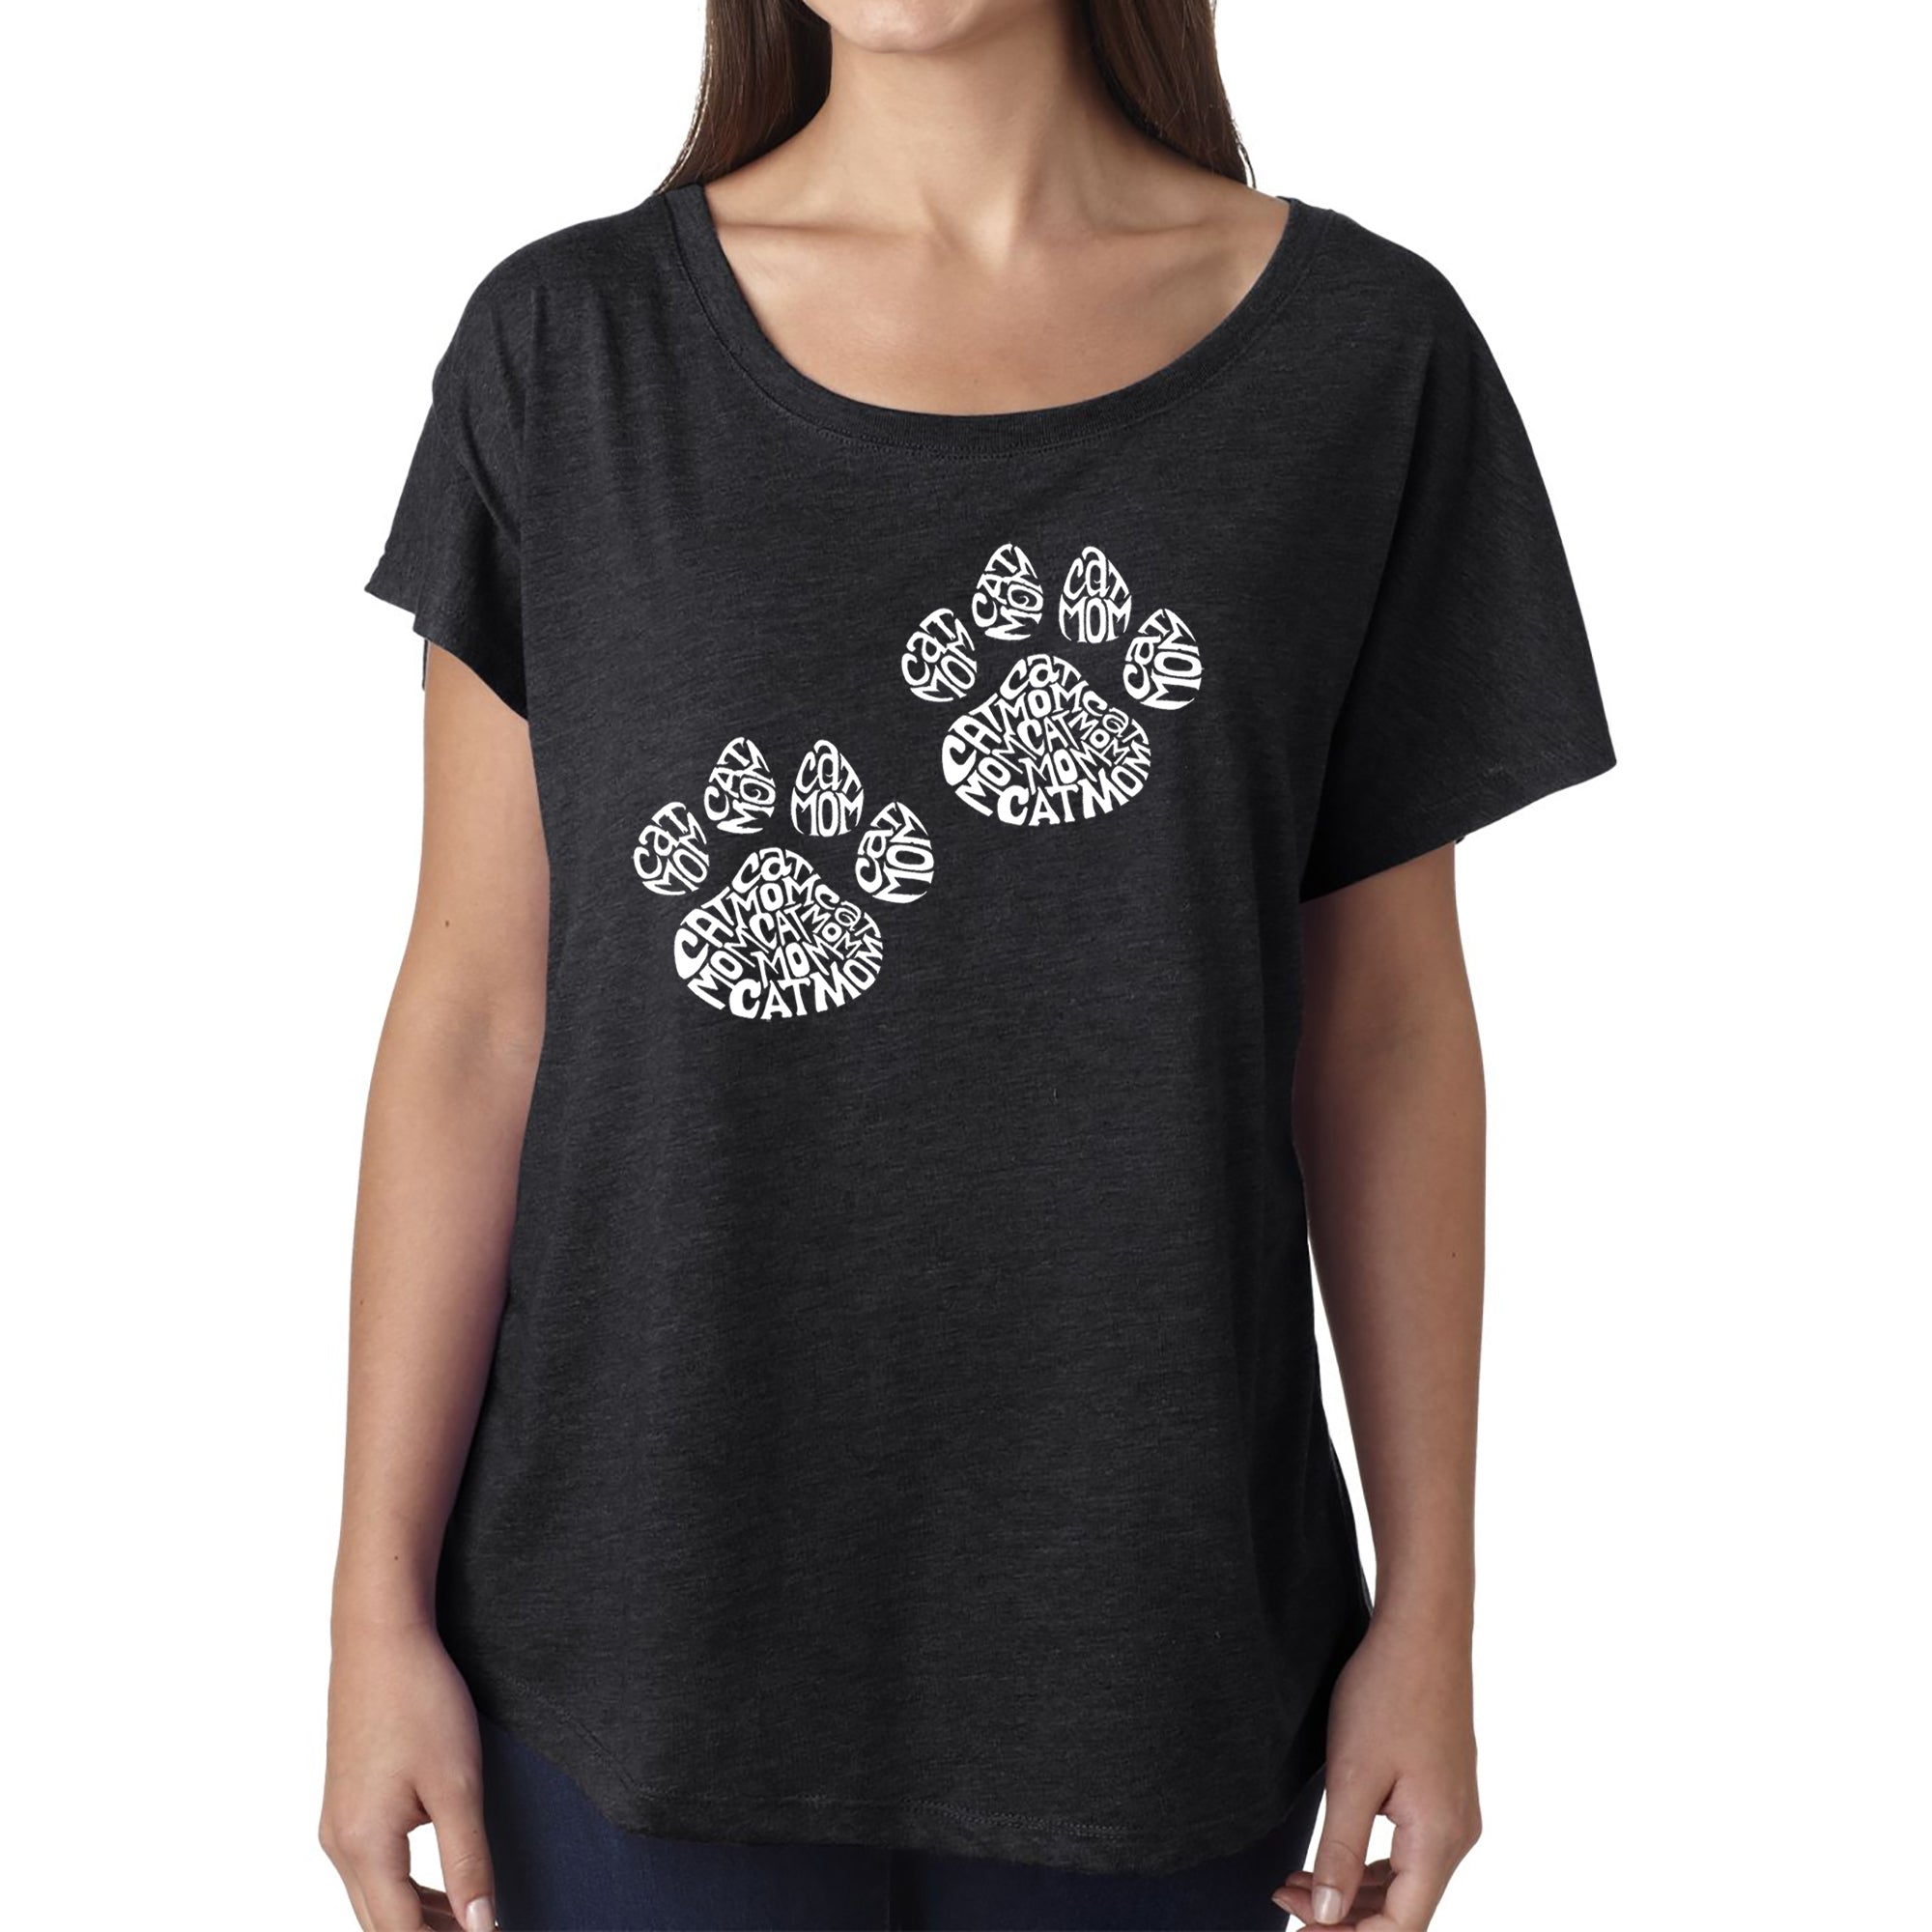 Cat Mom - Women's Loose Fit Dolman Cut Word Art Shirt - Black - X-Large